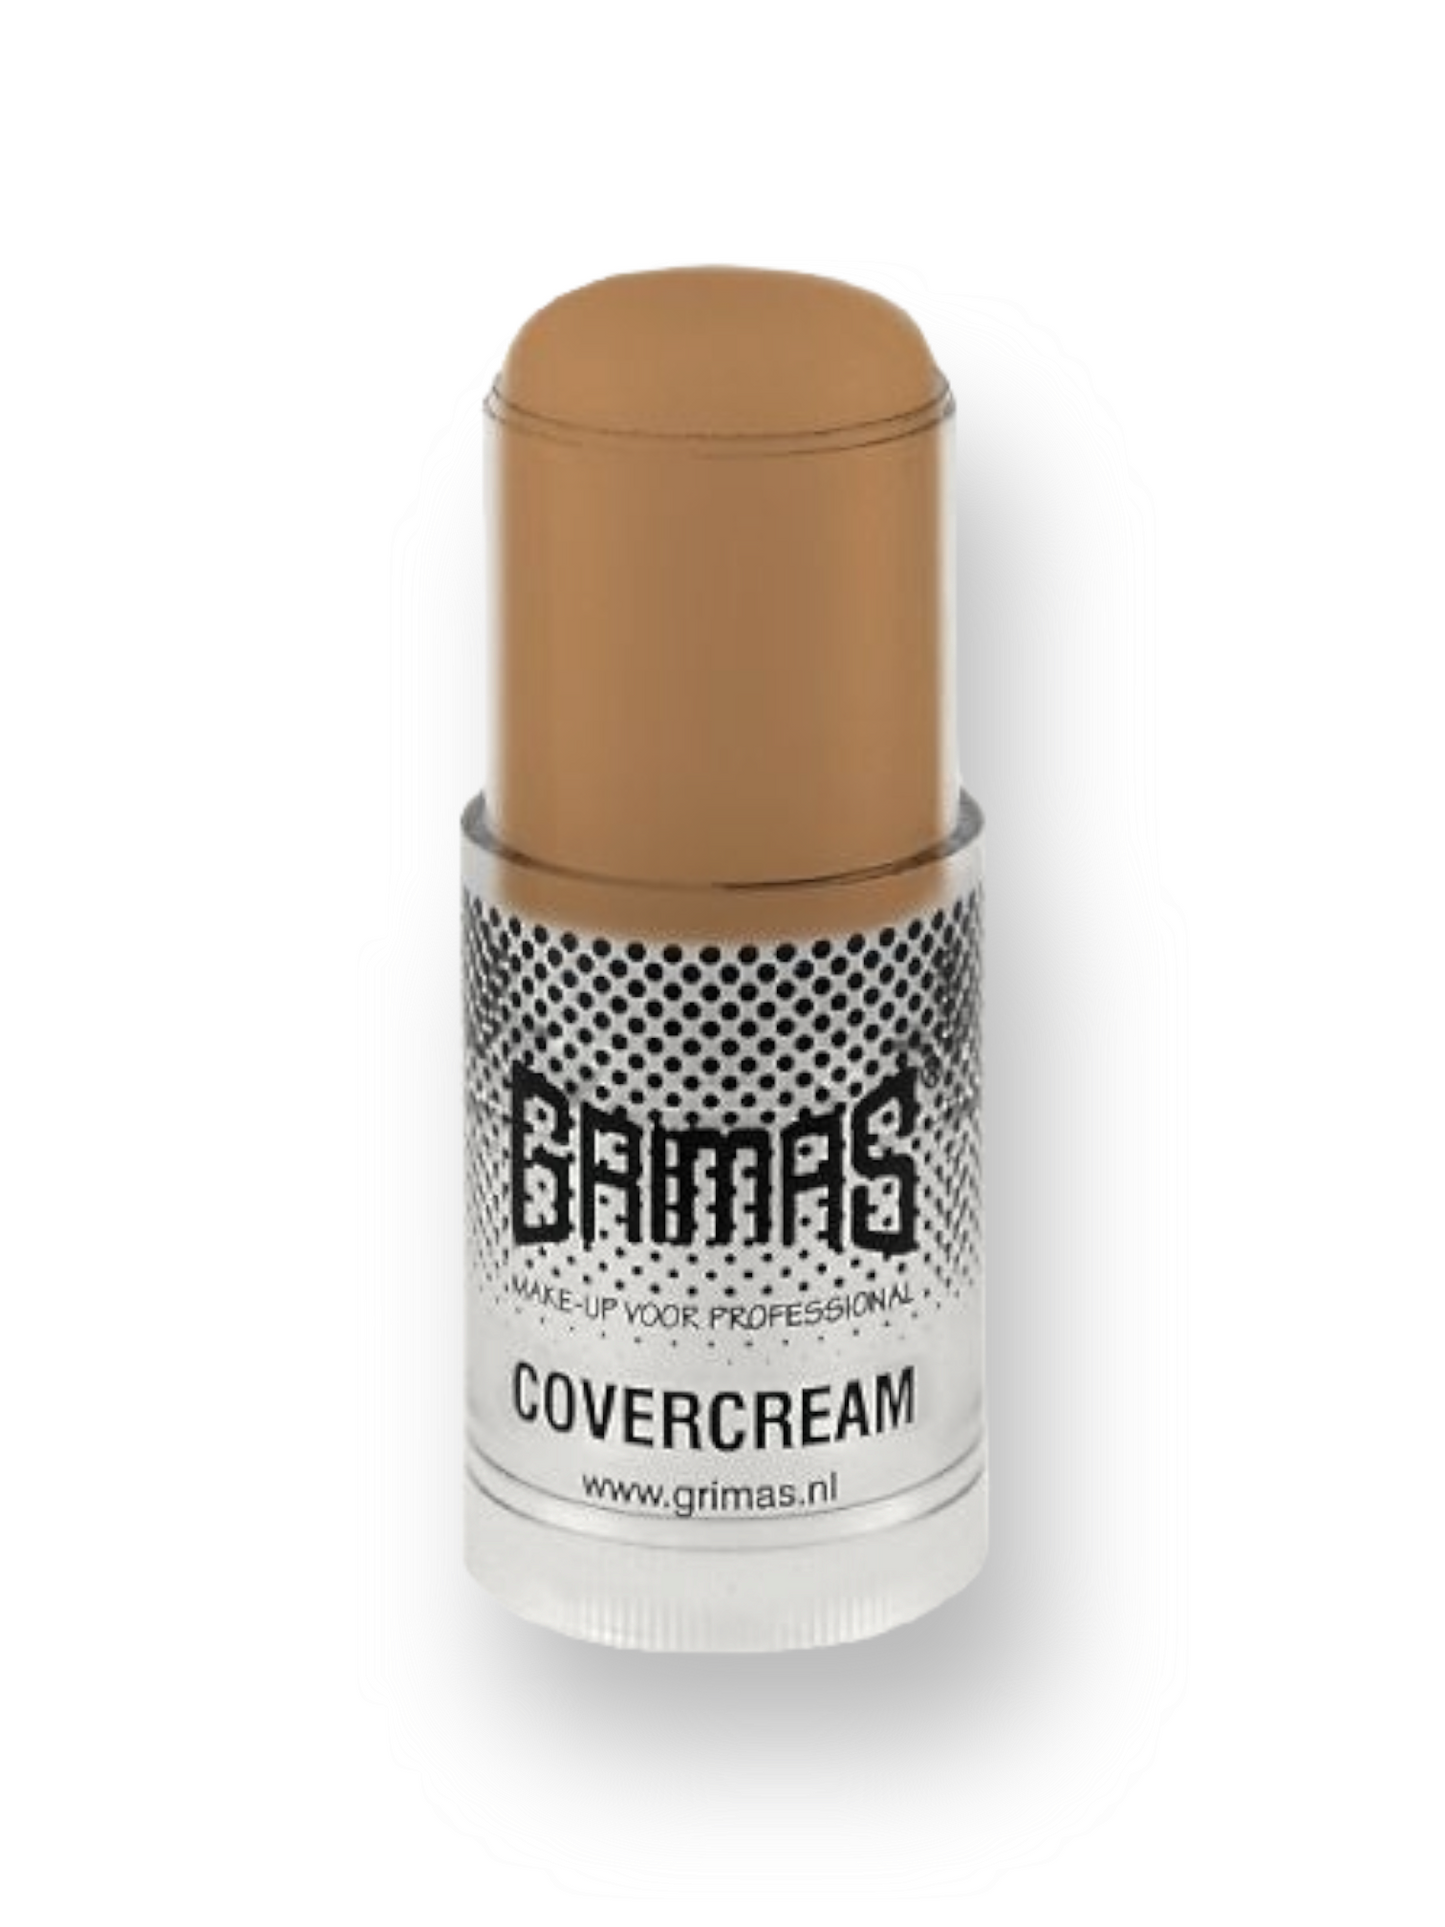 GRIMAS Cover Cream meikkivoidepuikko B4